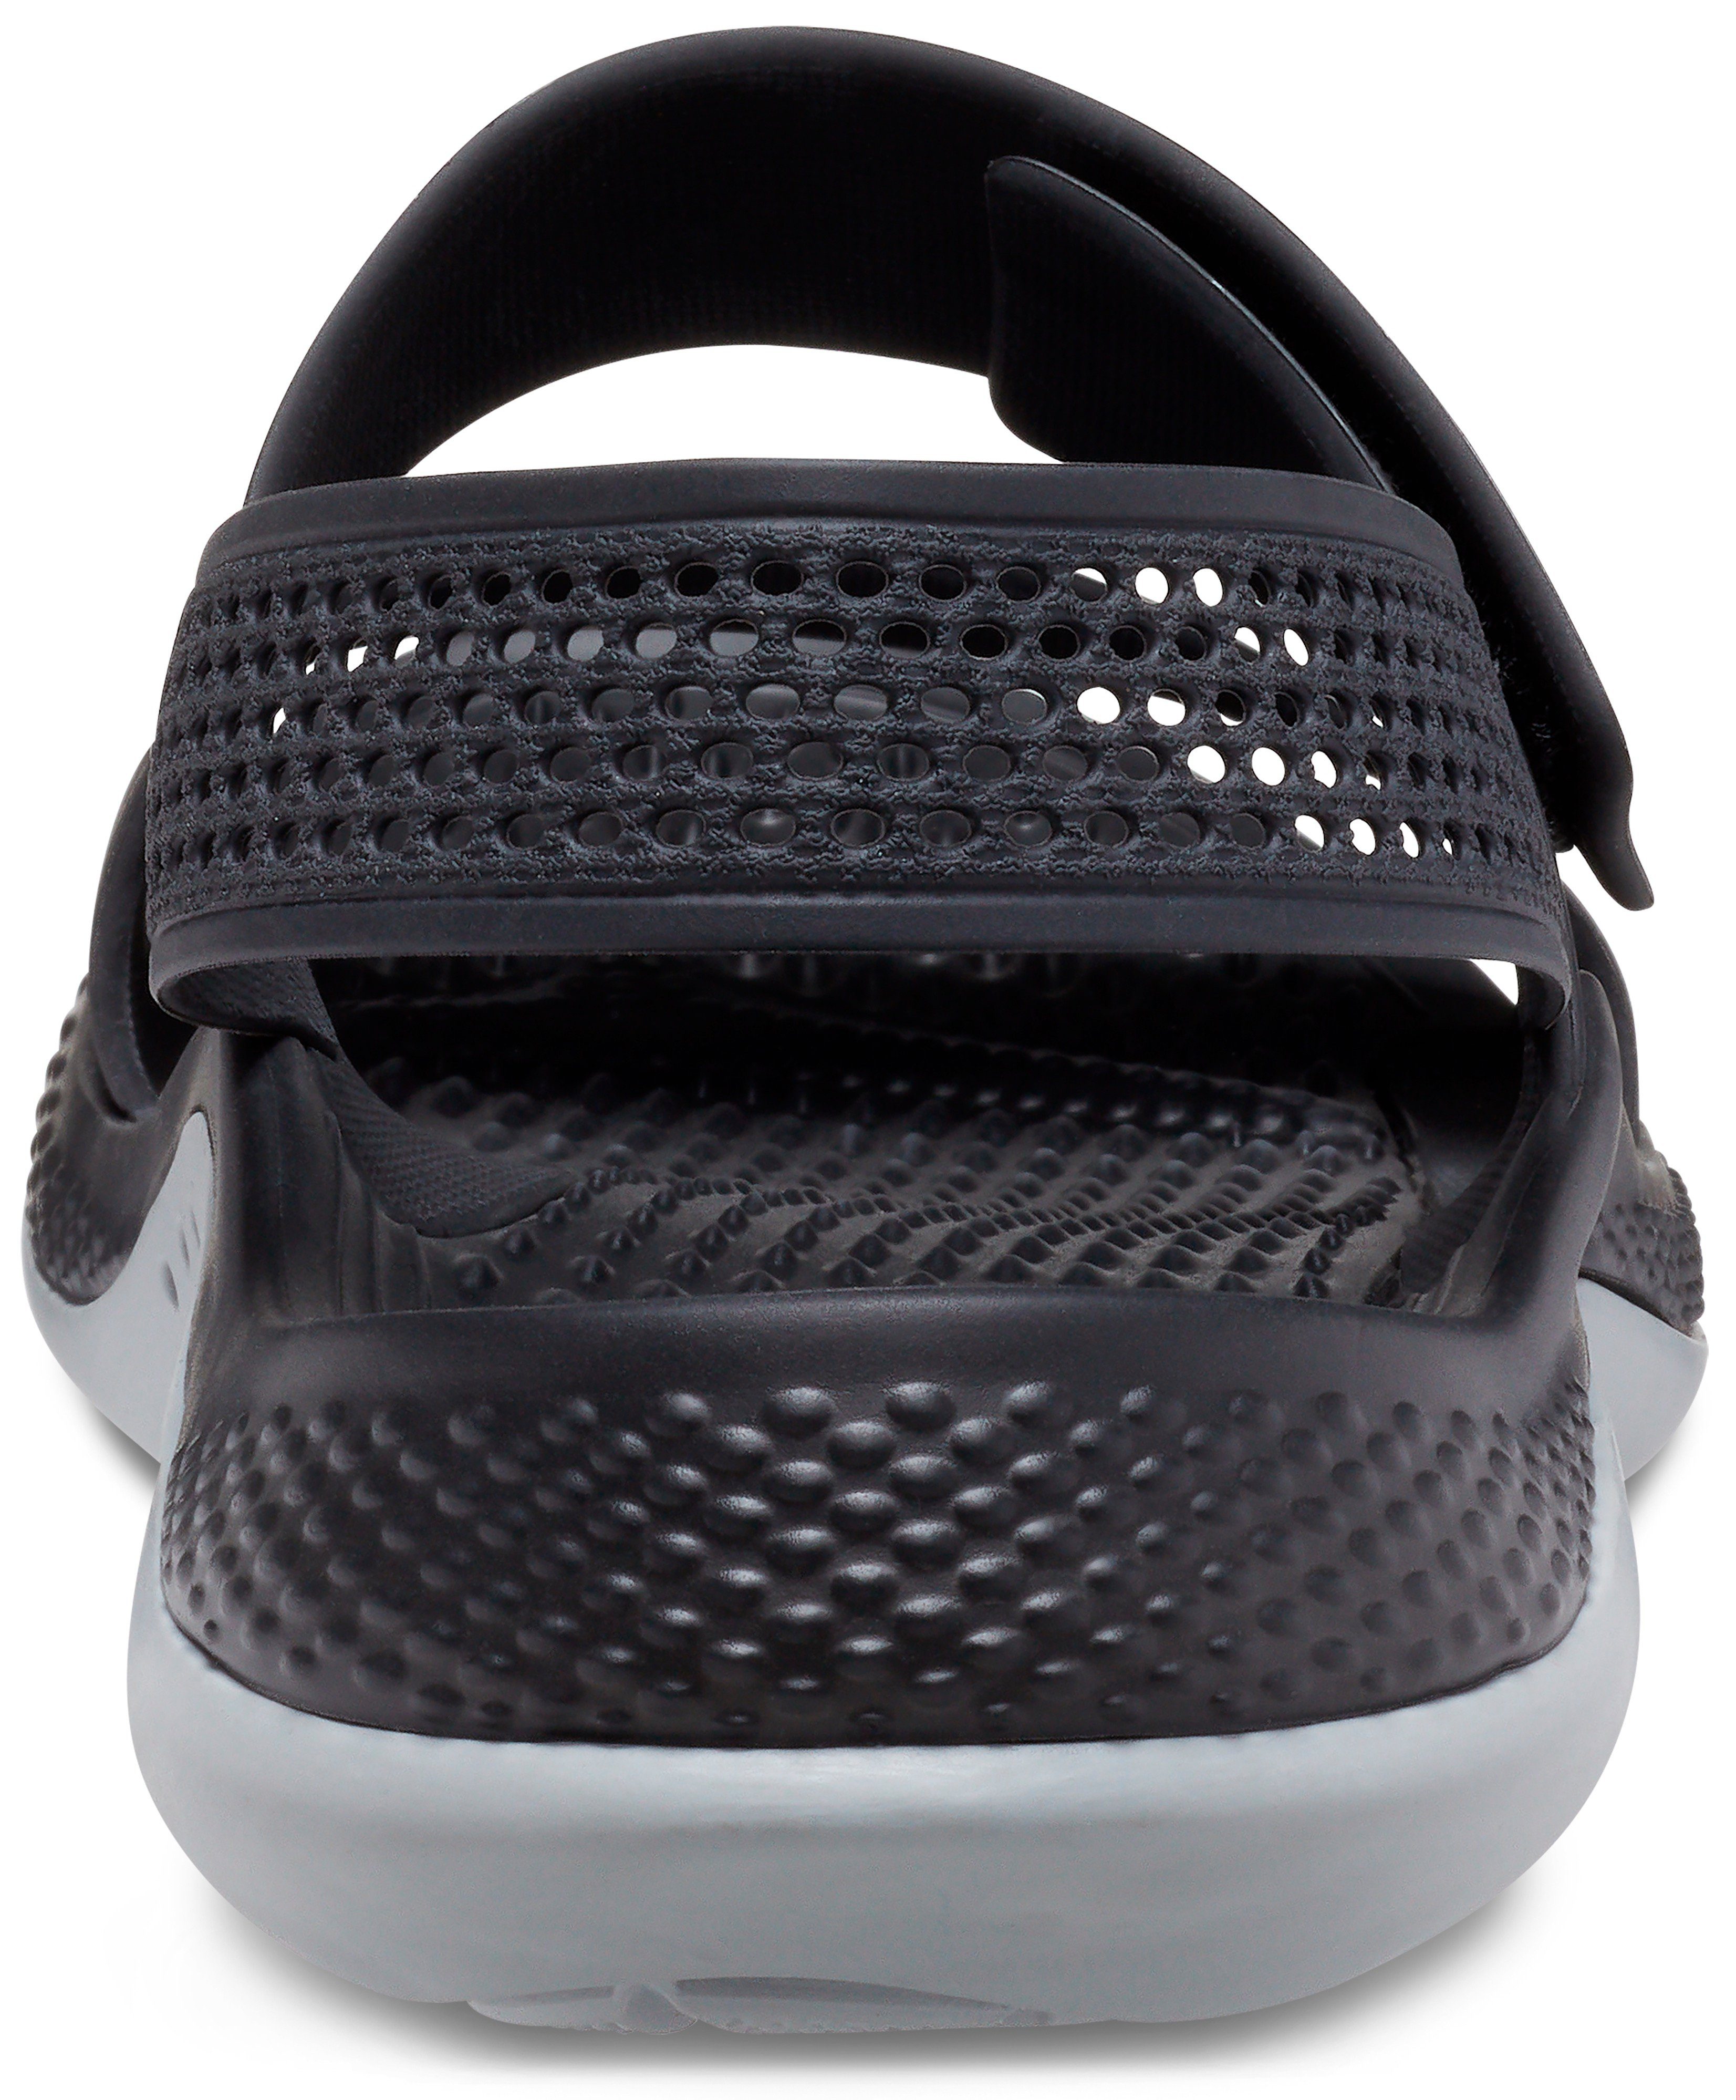 Laufsohle Sandal Crocs 360 flexibler schwarz-grau Sandale mit LiteRide